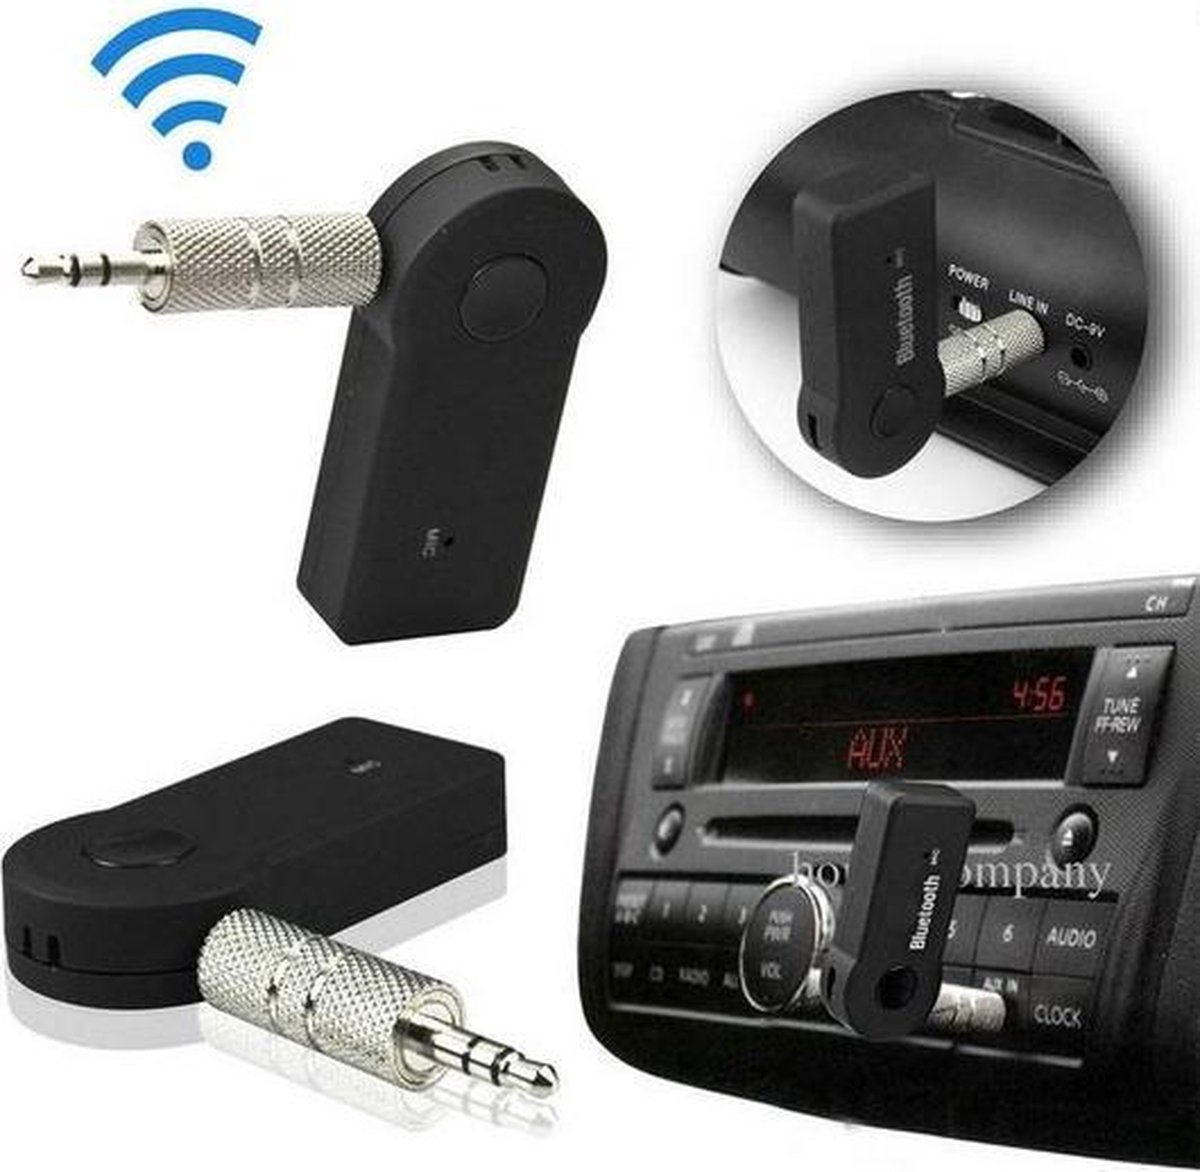 Draadloze Bluetooth Muziekontvanger - Audio Music Streaming Adapter Receiver - Handsfree Carkit & Thuisgebruik - MP3 Player 3.5mm aux aansluiting - Geweldige Geluidskwaliteit Stereo audio Output - Merkloos